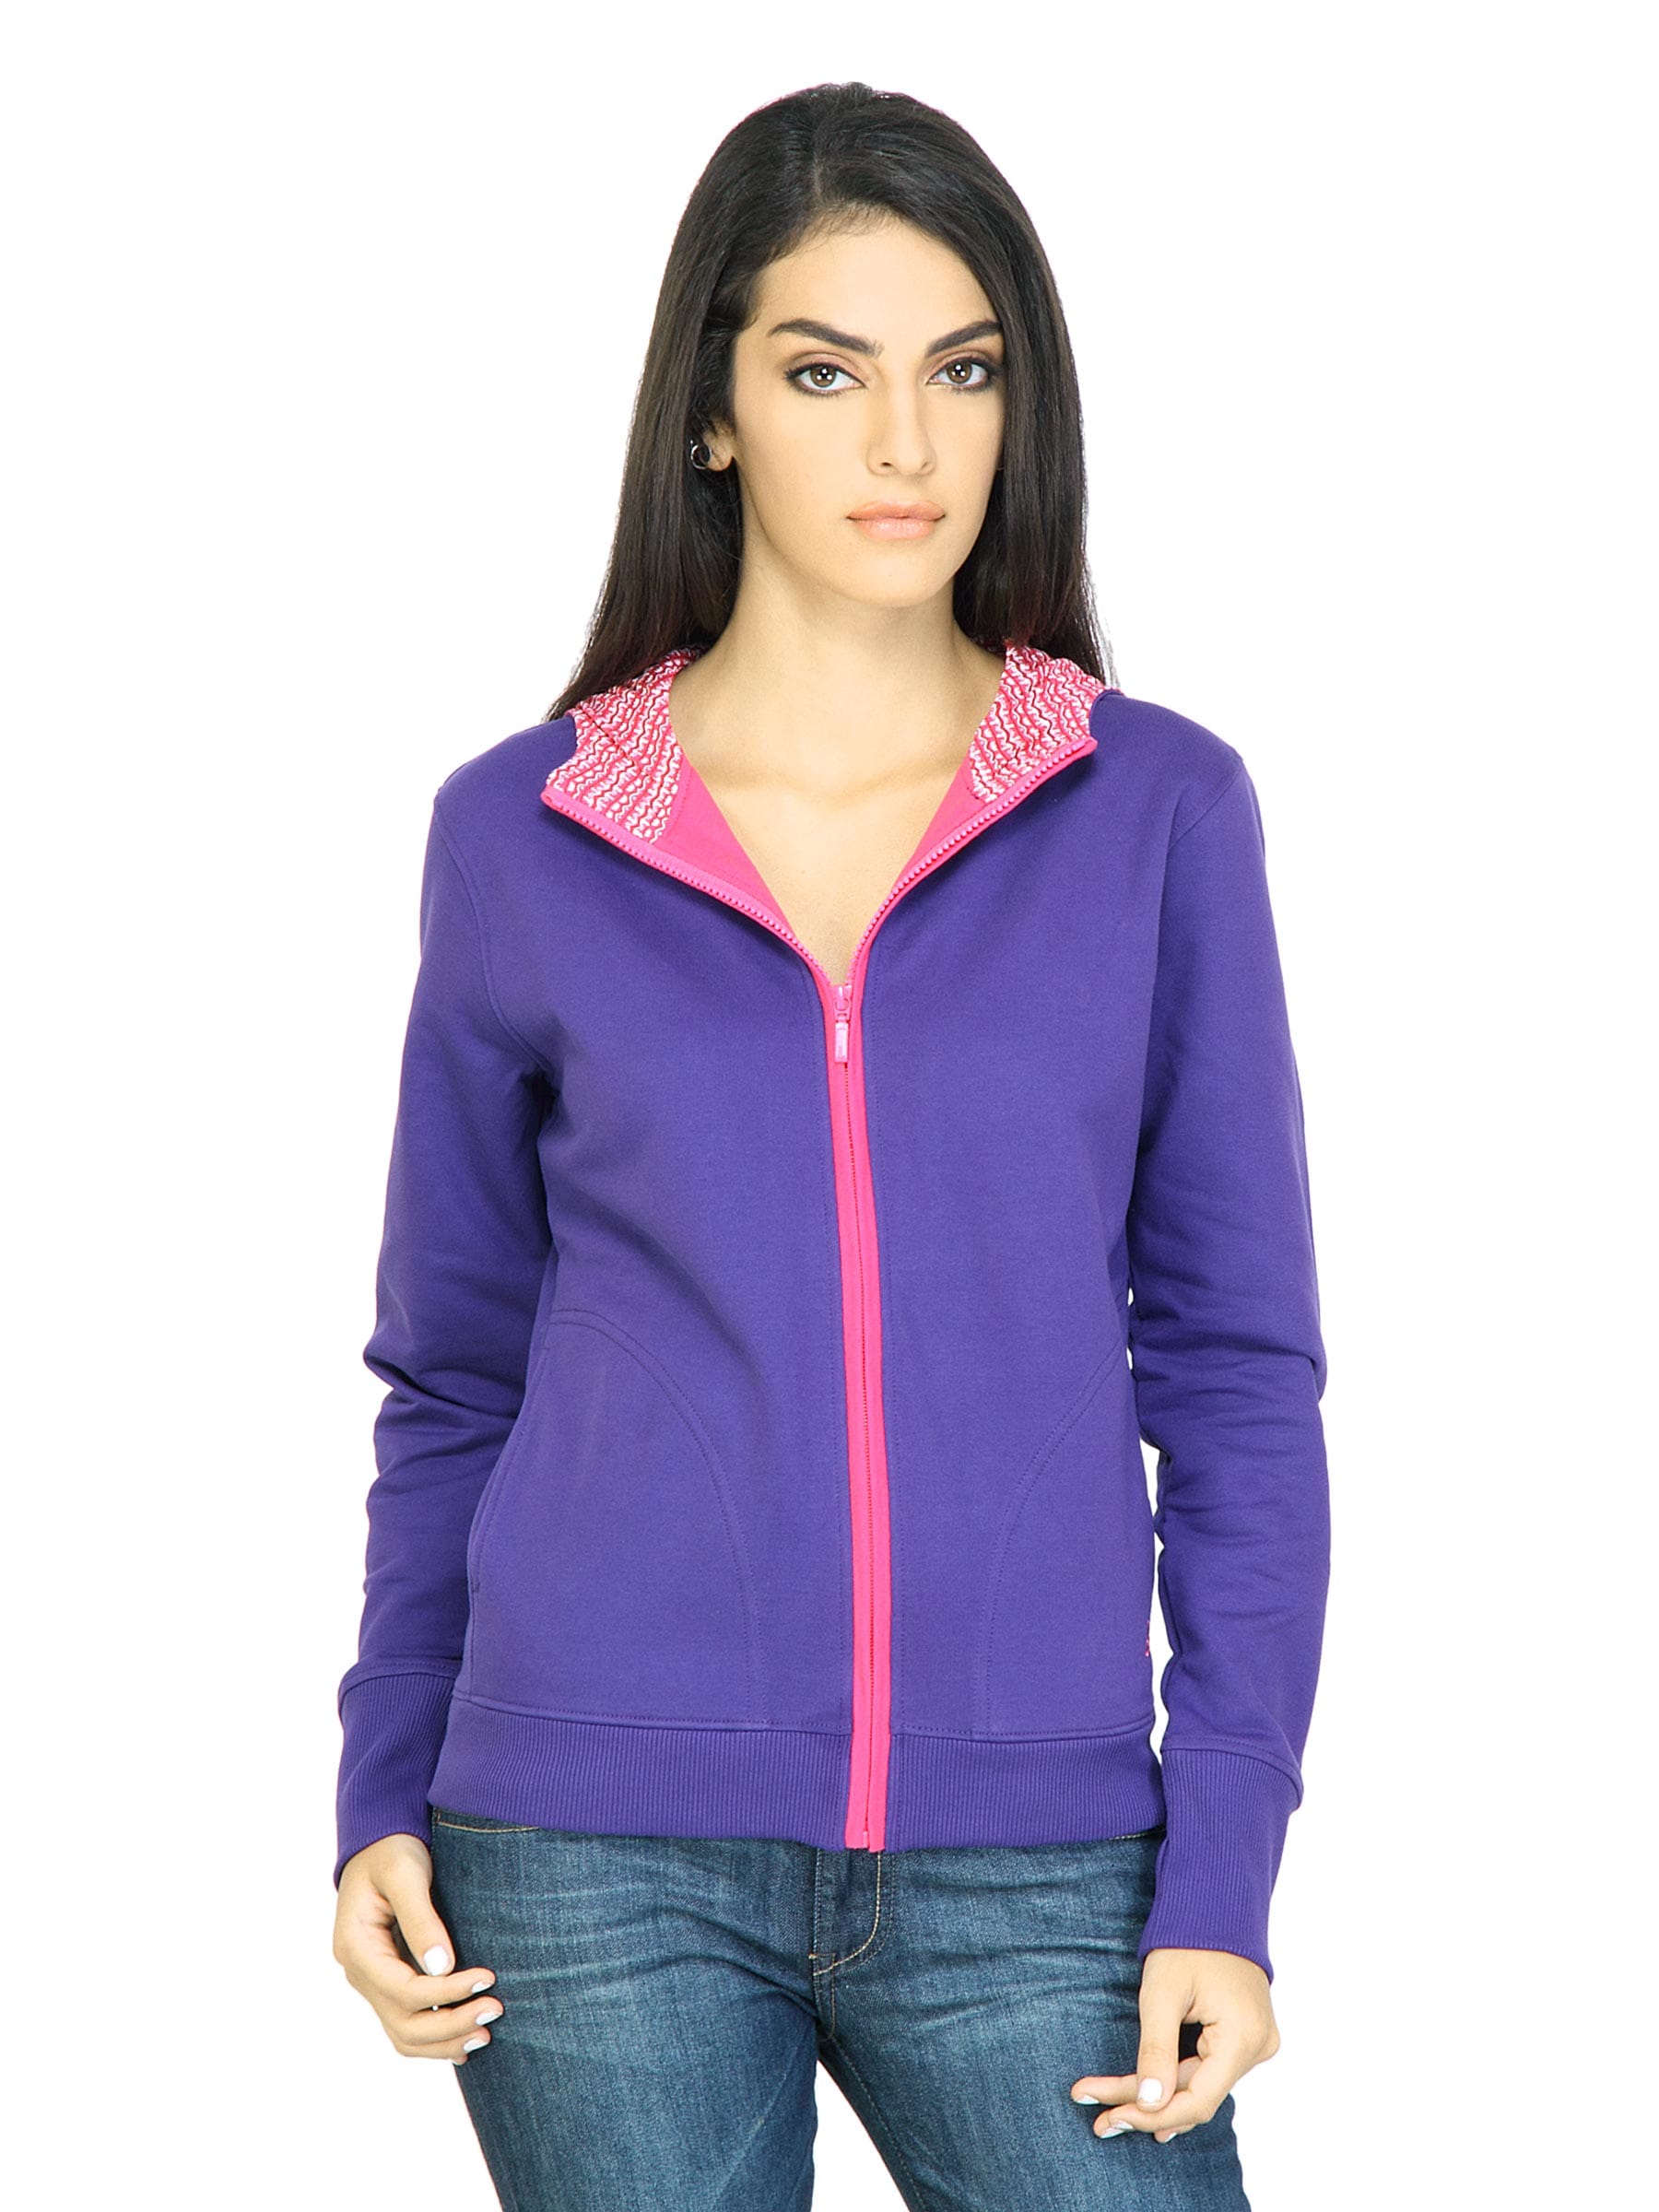 Urban Yoga Women Solid Purple Sweatshirts